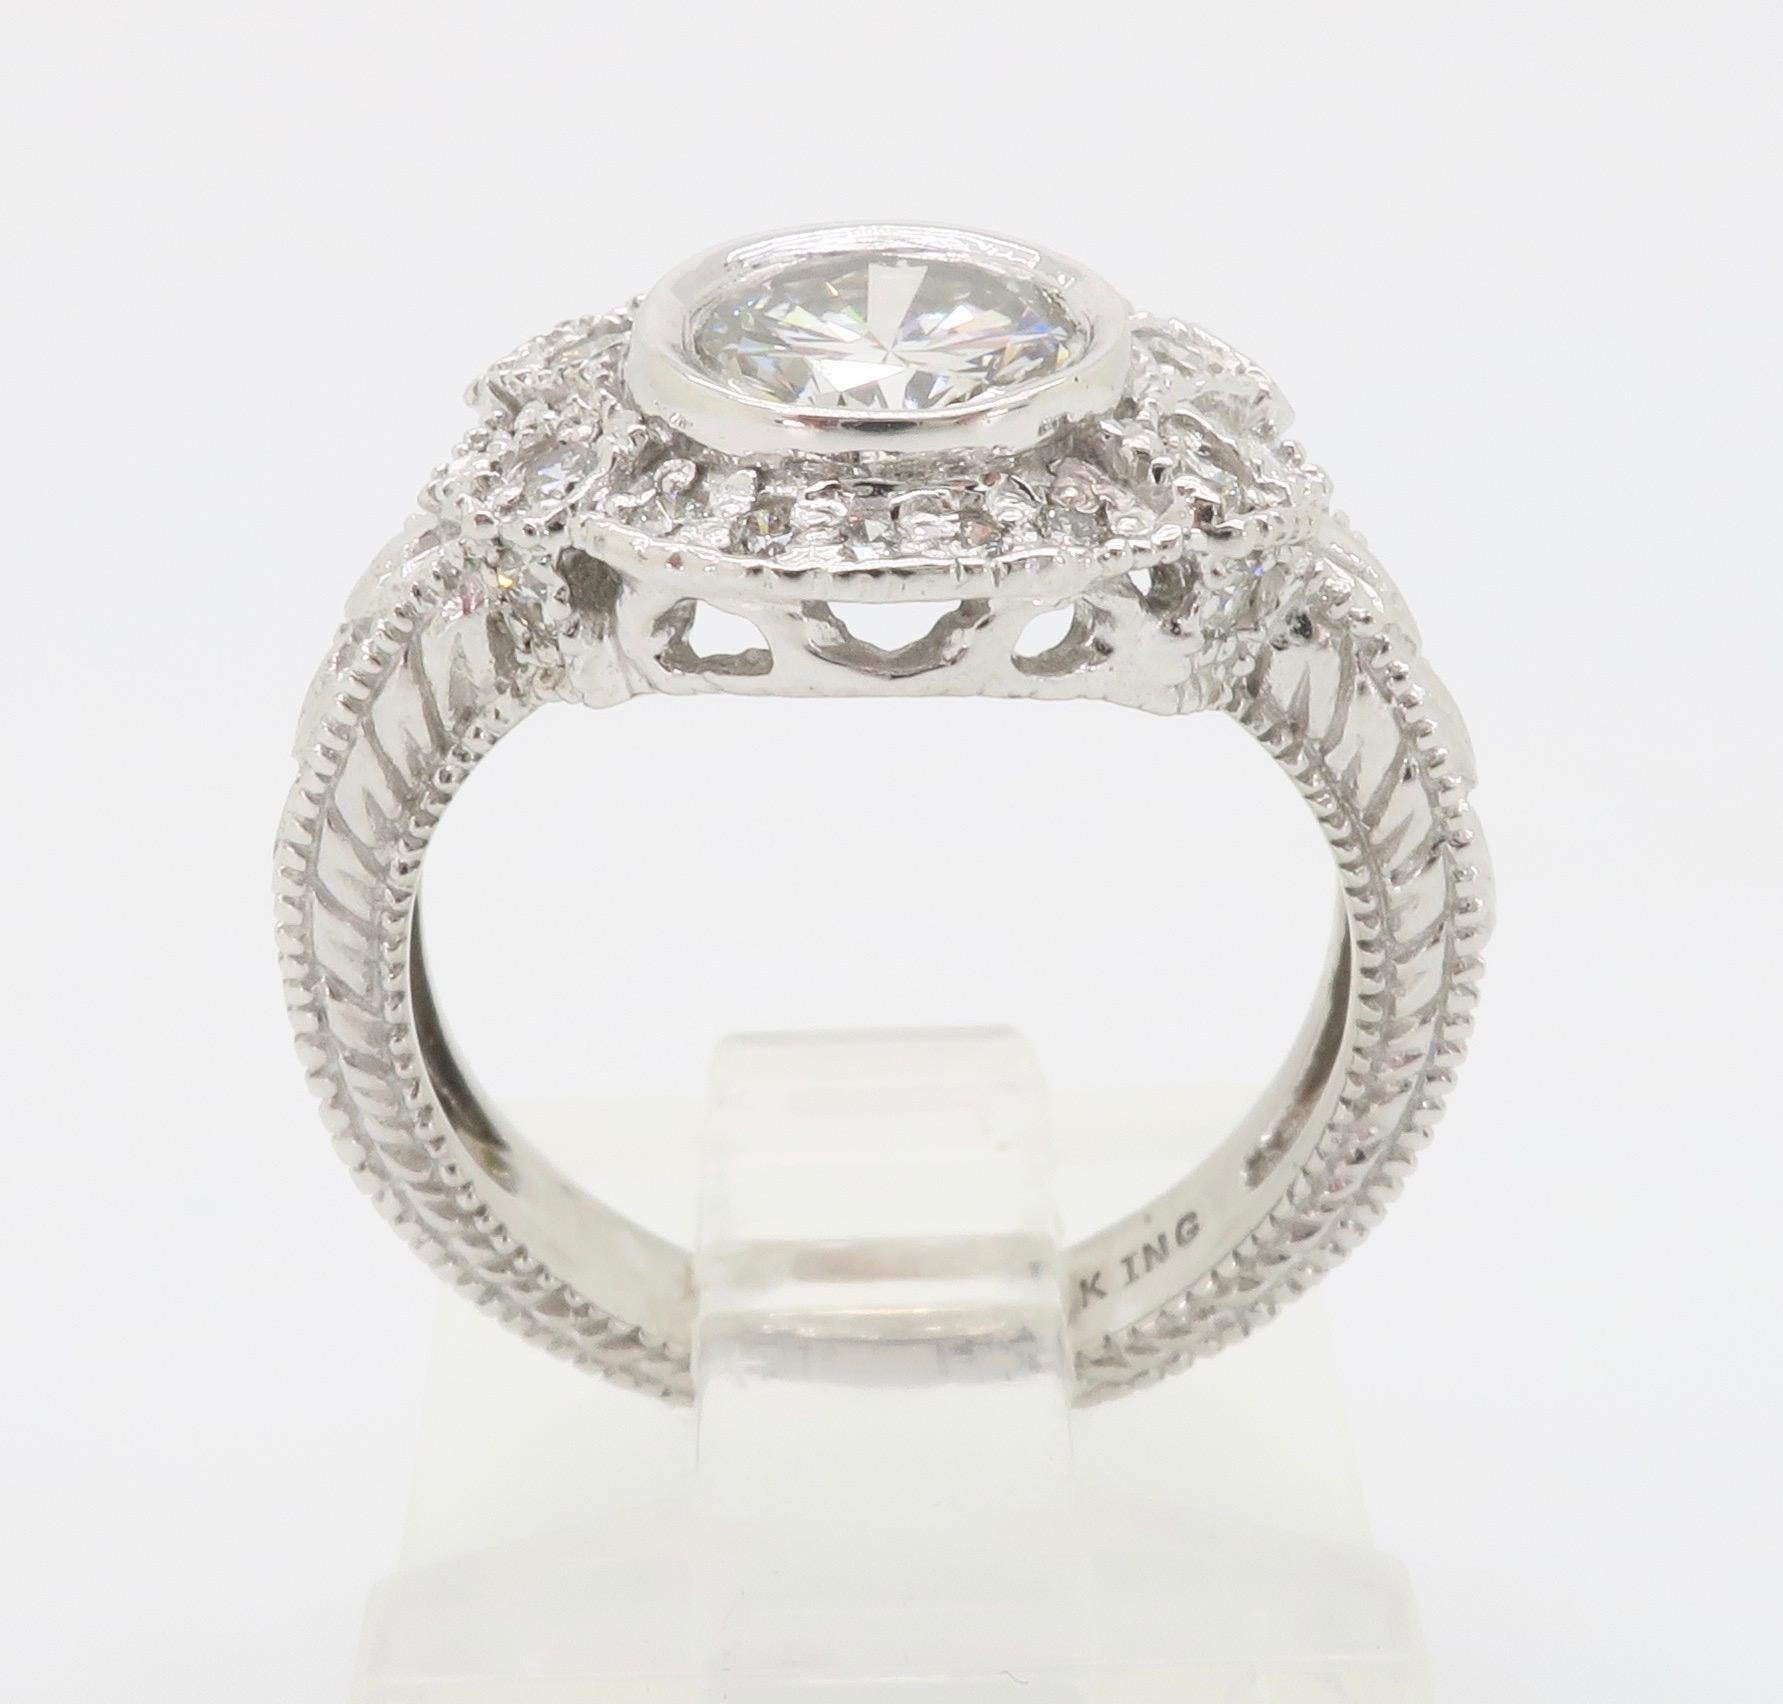 Vintage Inspired 1.27 Carat Diamond Ring Made in 14 Karat White Gold For Sale 5